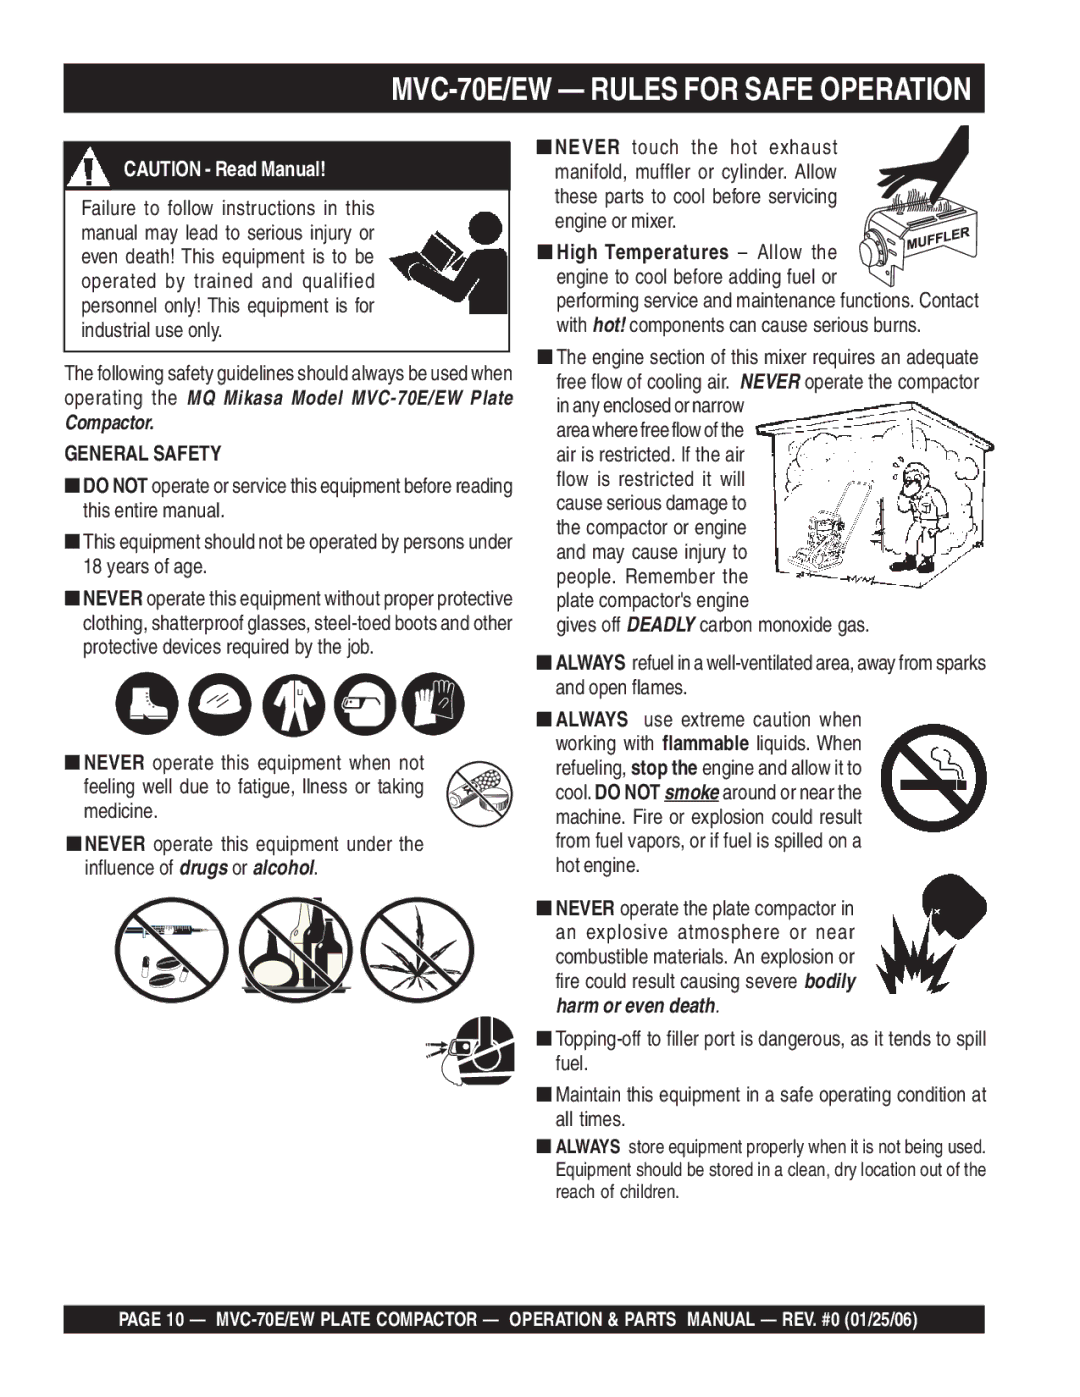 Multiquip manual MVC-70E/EW Rules for Safe Operation 